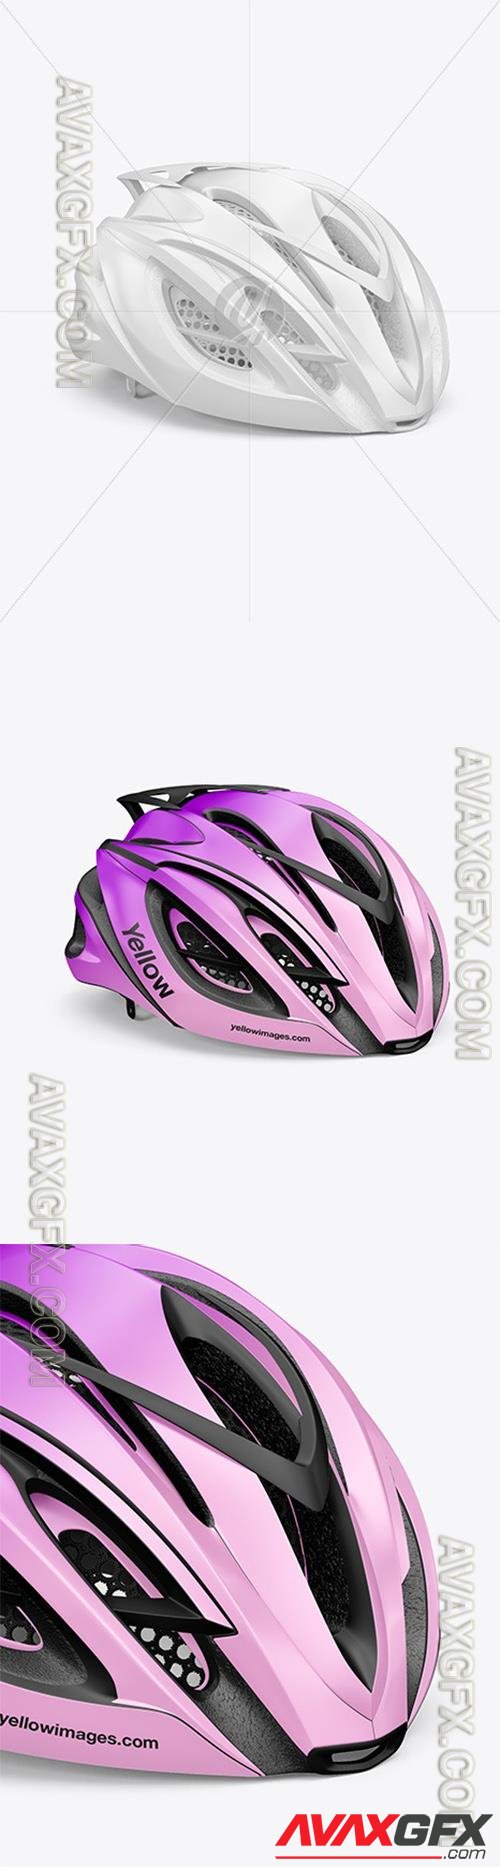 Cycling Helmet Mockup 97173